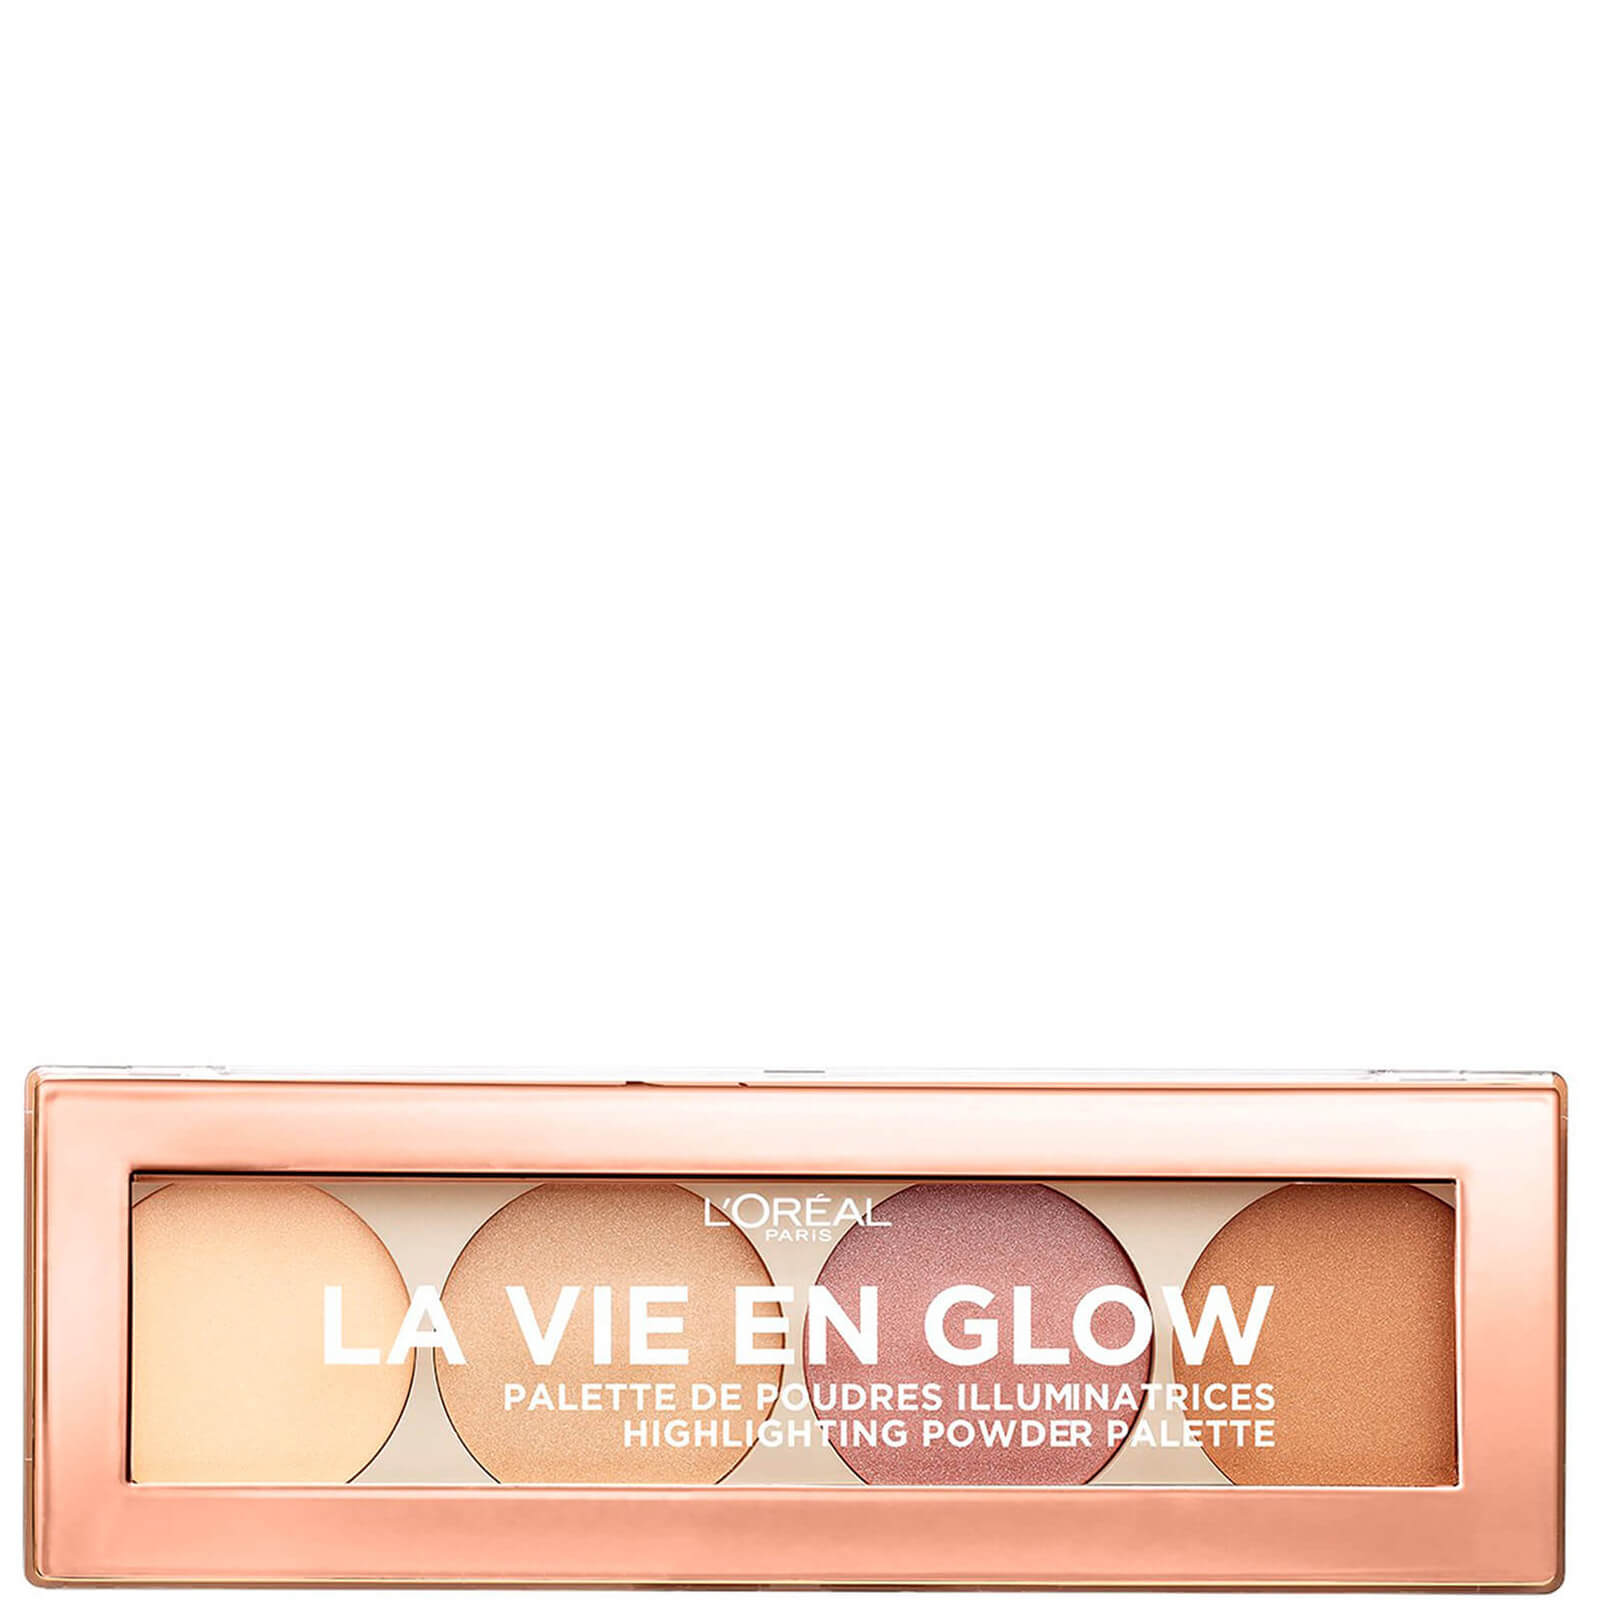 Paleta de polvos iluminadores La Vie En Glow de L'Oréal Paris - Warm Glow 10 g